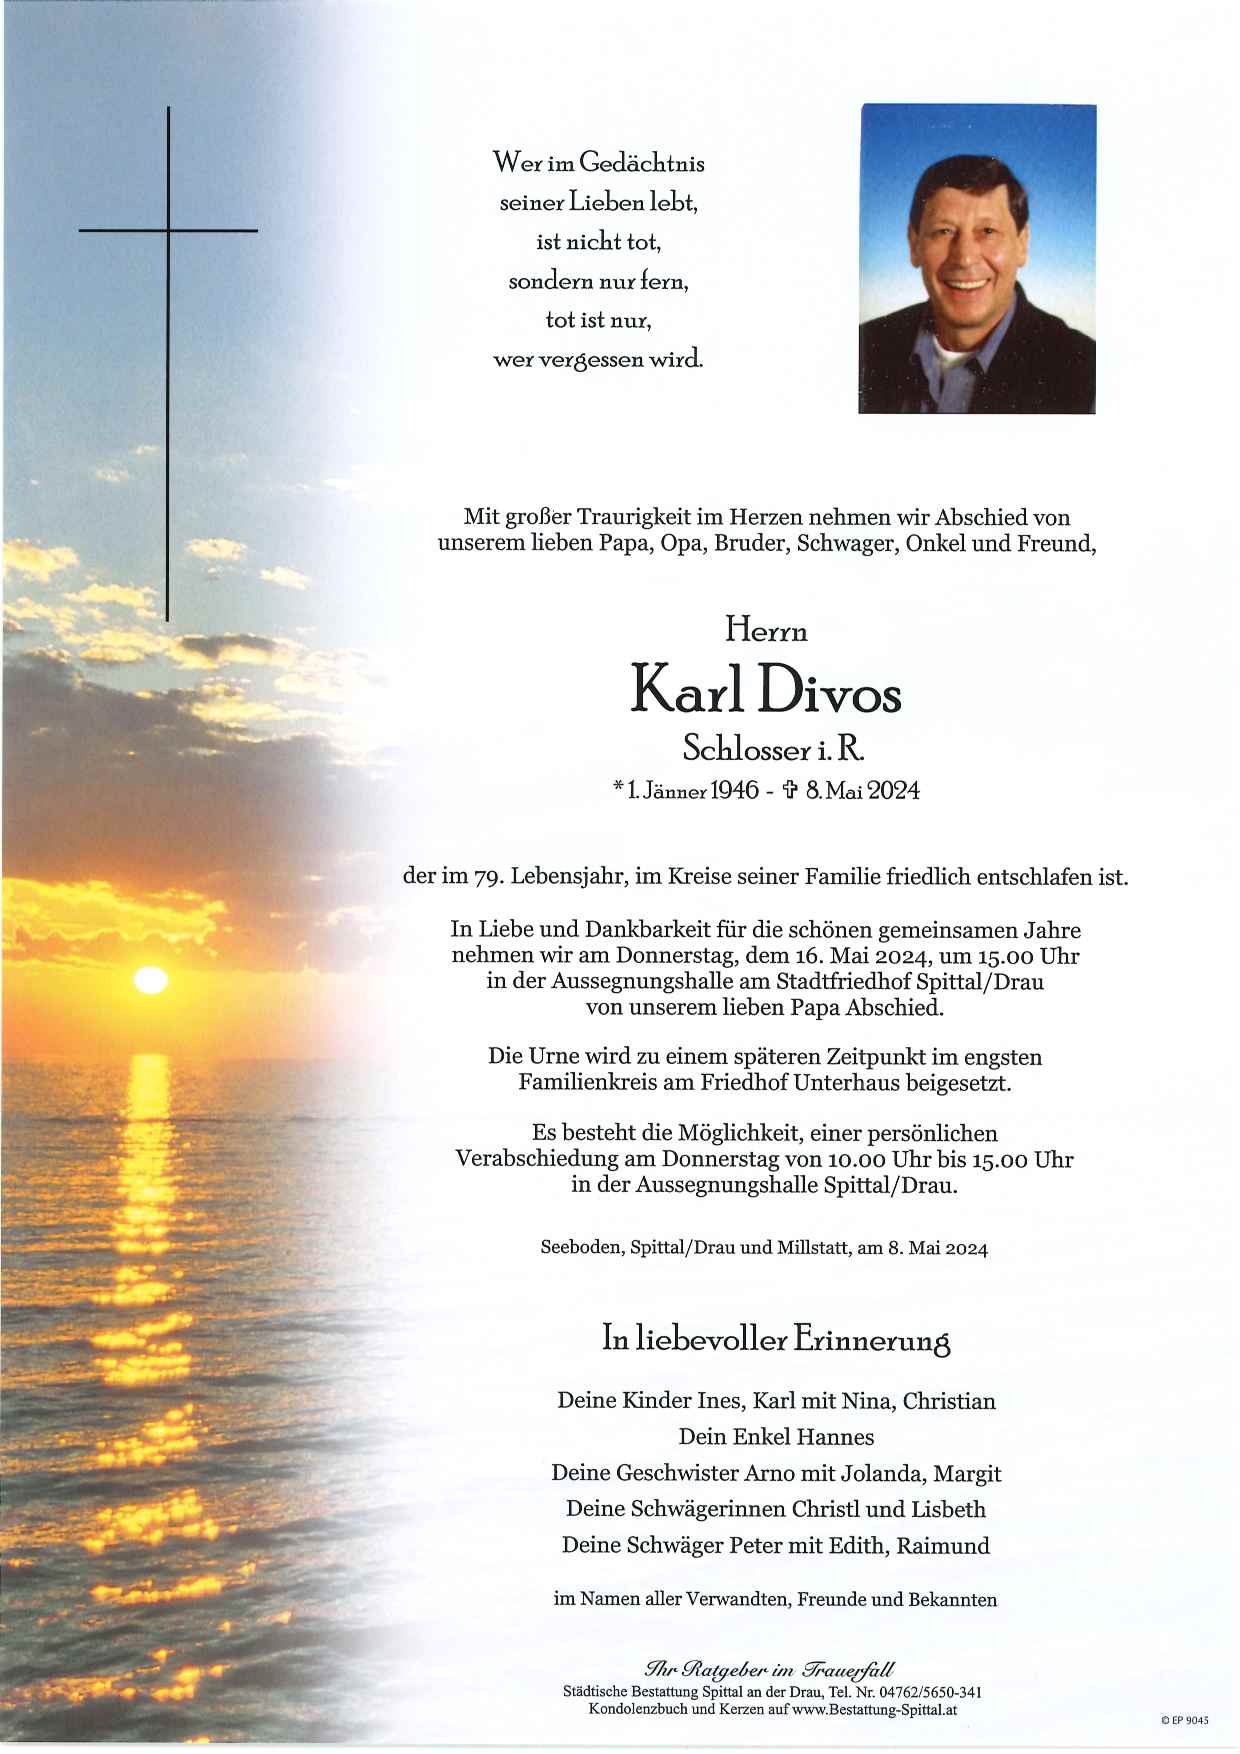 Karl Divos